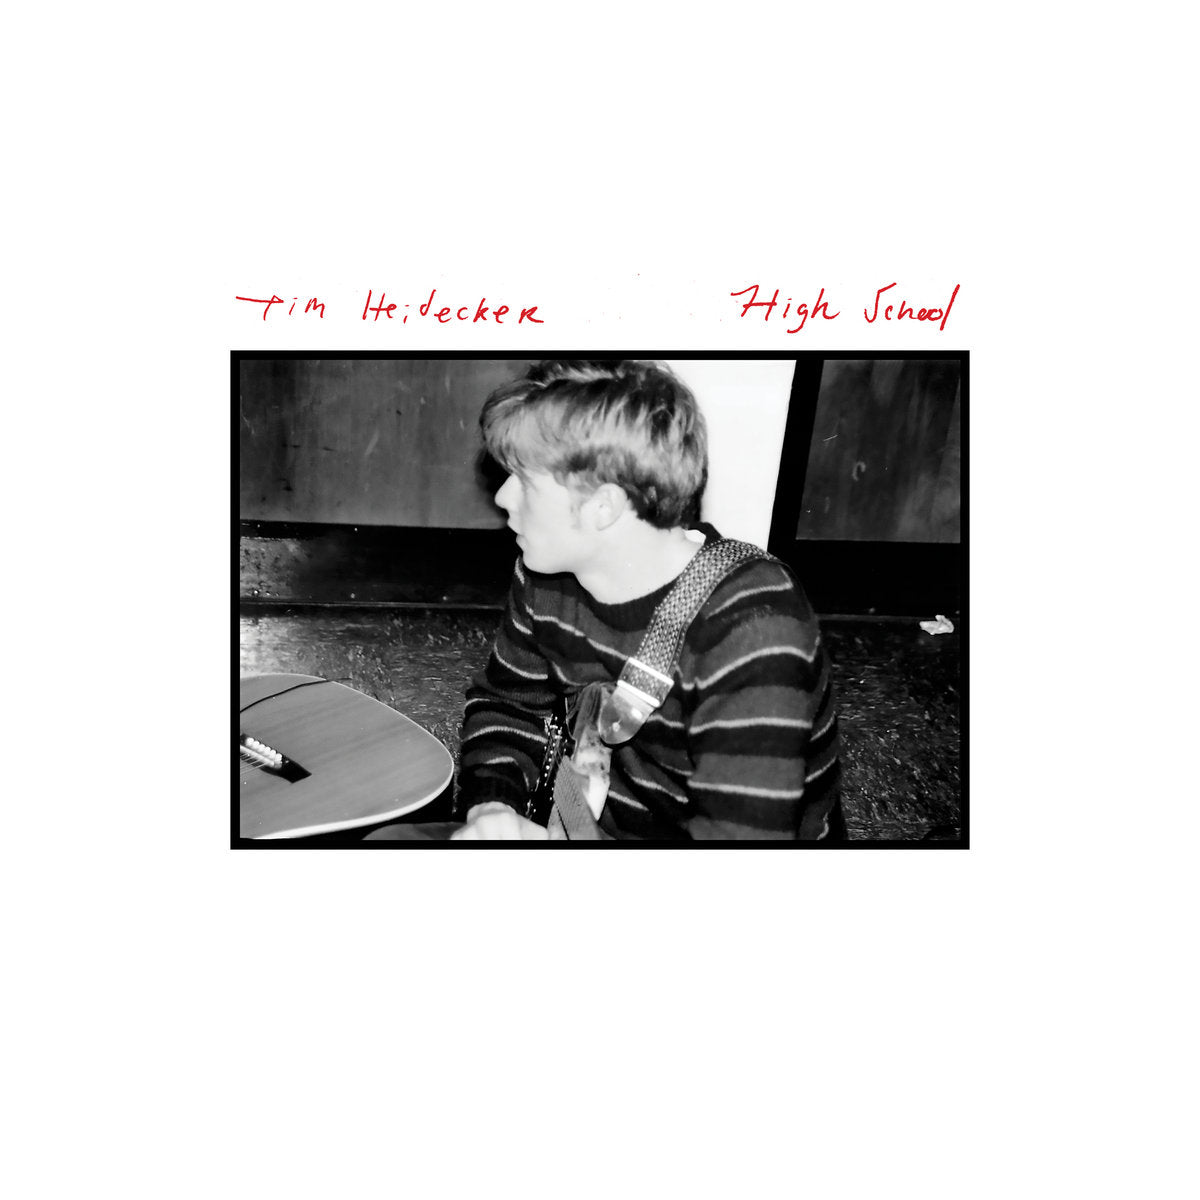 TIM HEIDECKER - HIGH SCHOOL Vinyl LP